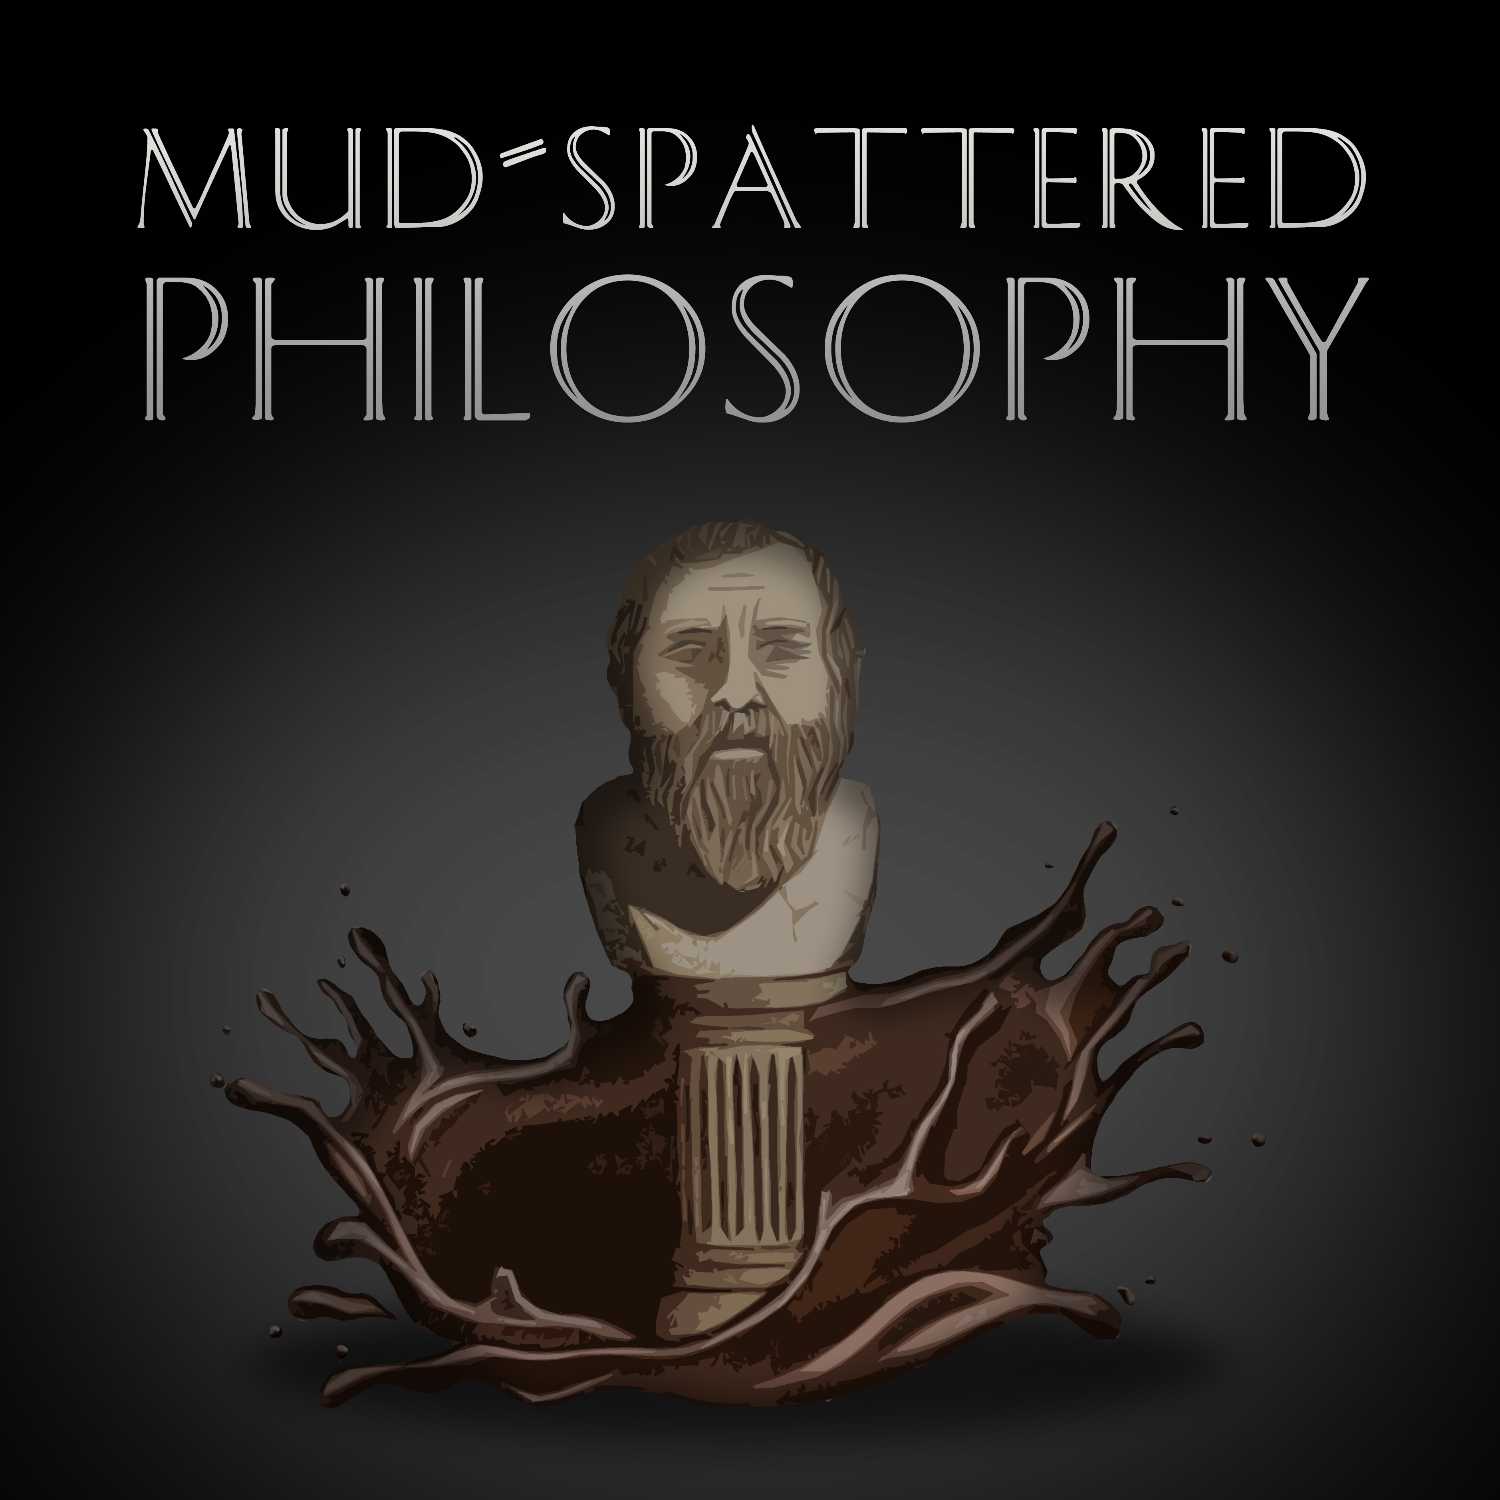 Mud-Spattered Philosophy